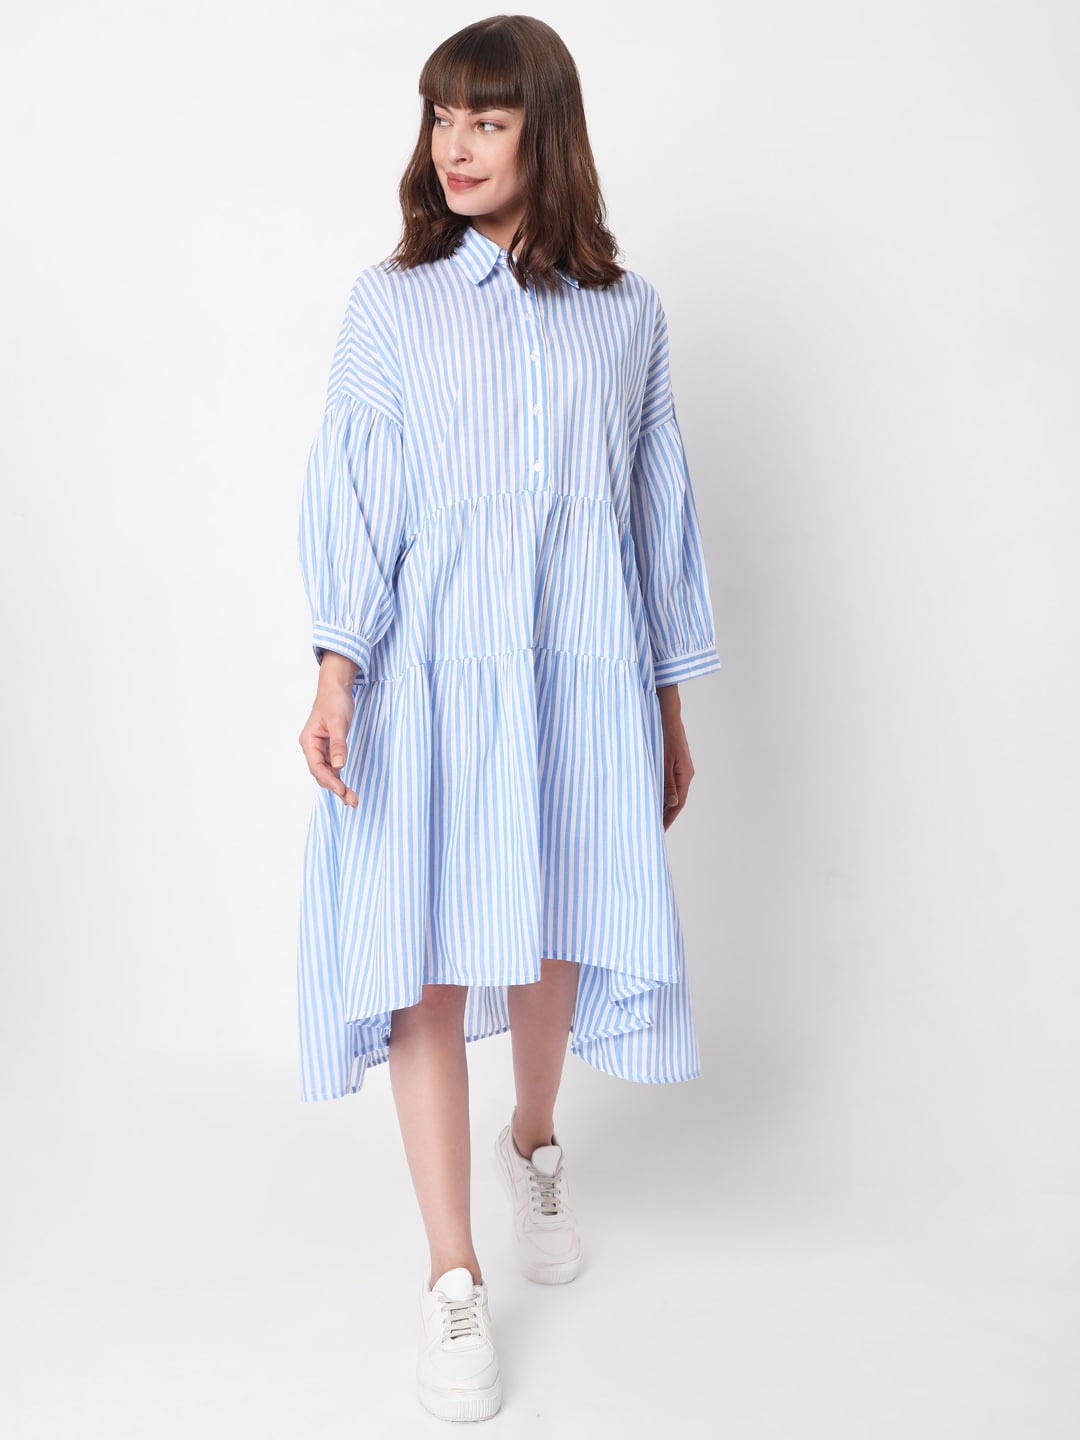 Vero Moda Women Blue & White Striped Shirt Dress - buy at the price of ...